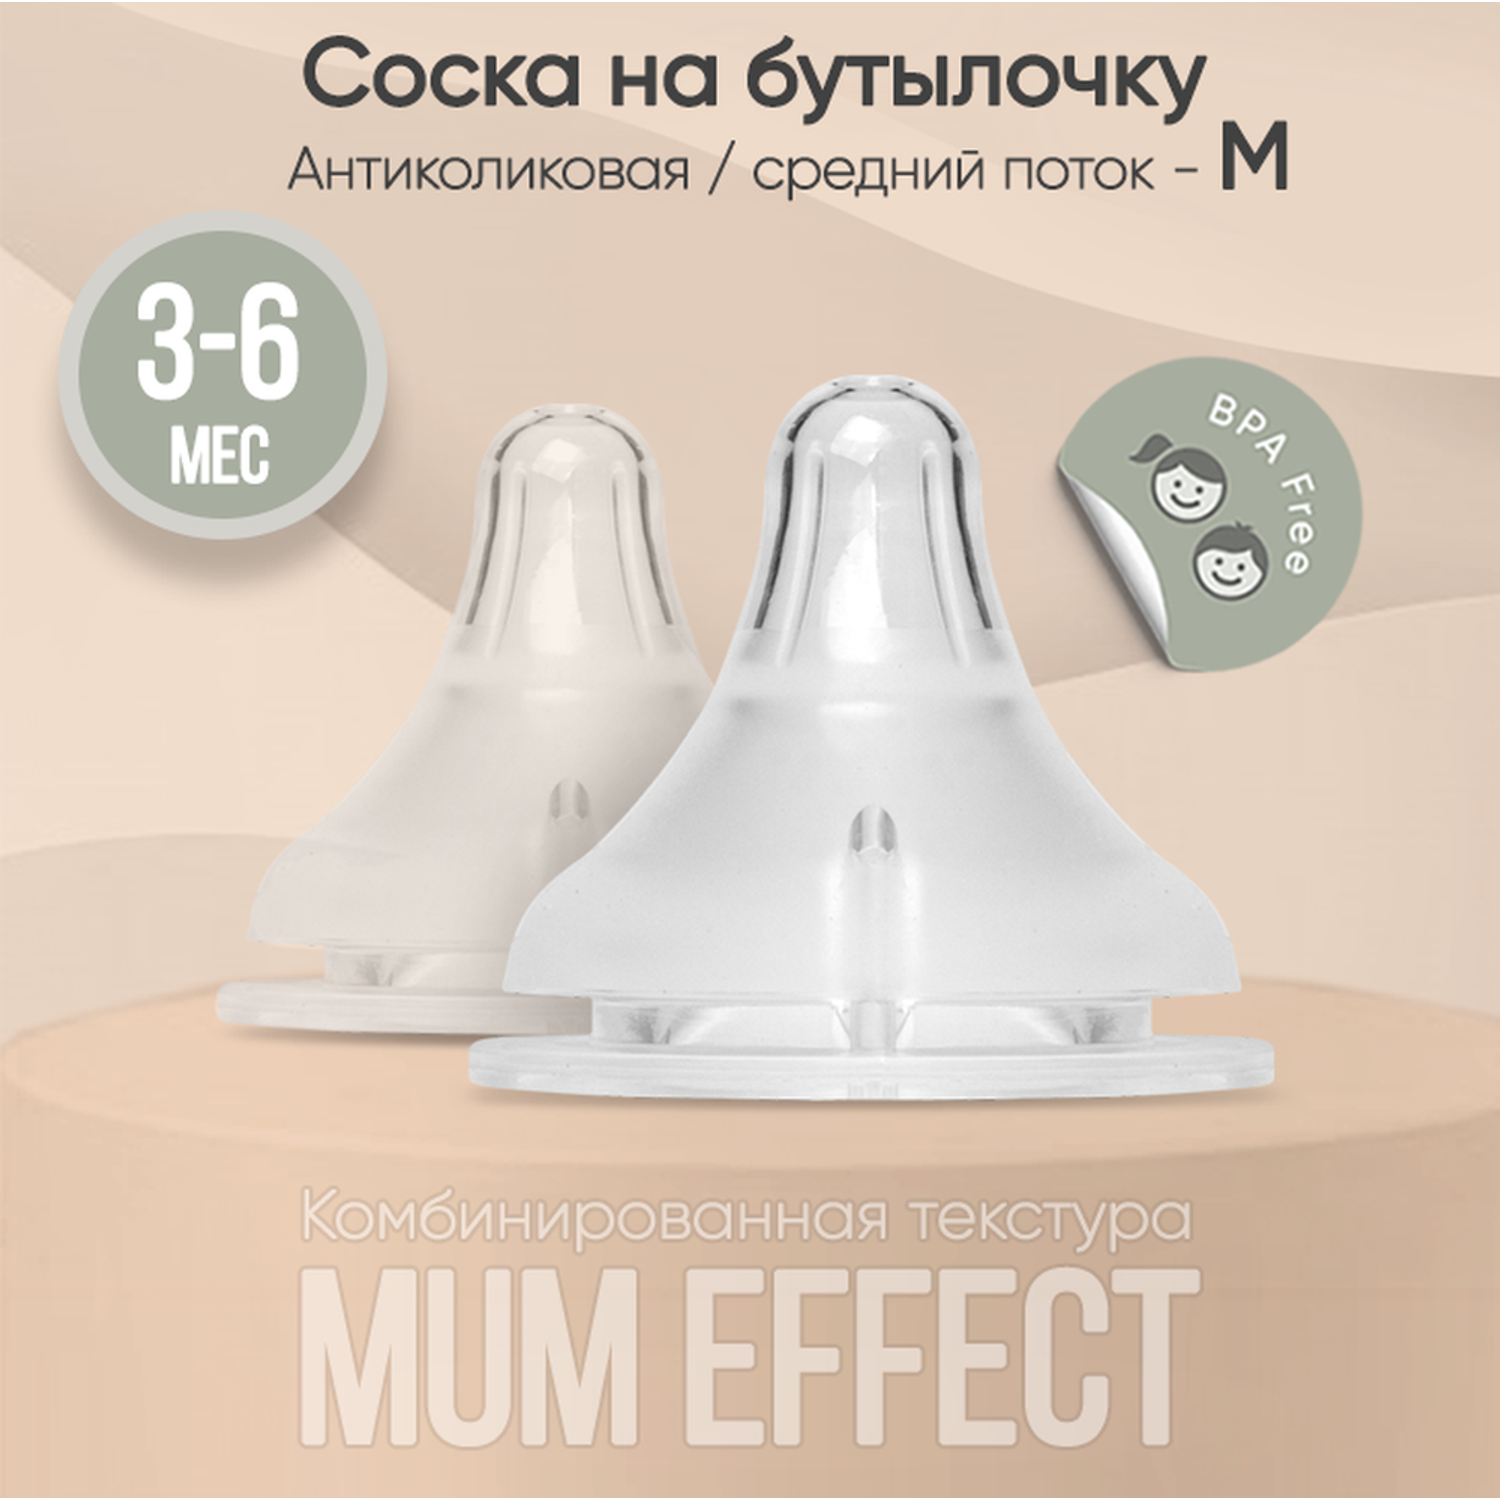 Соска на бутылочку paomma из силикона mum effect Anti-Colic M 3-6 мес 2 шт - фото 1